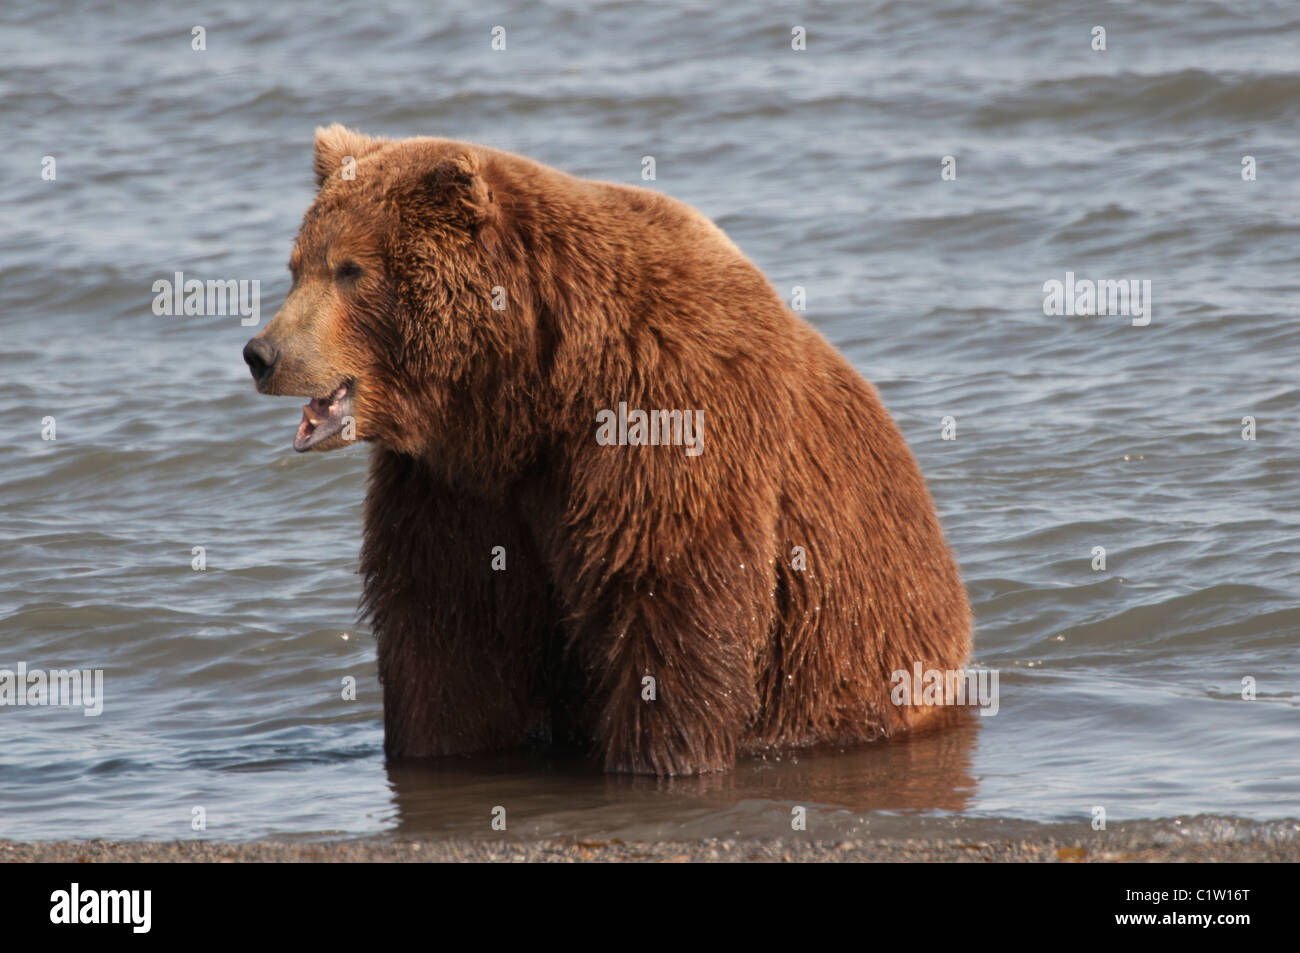 Kodiak brown bear (Ursus arctos middendorffi) foraging in water, Swikshak, Katami Coast, Alaska, USA Stock Photo